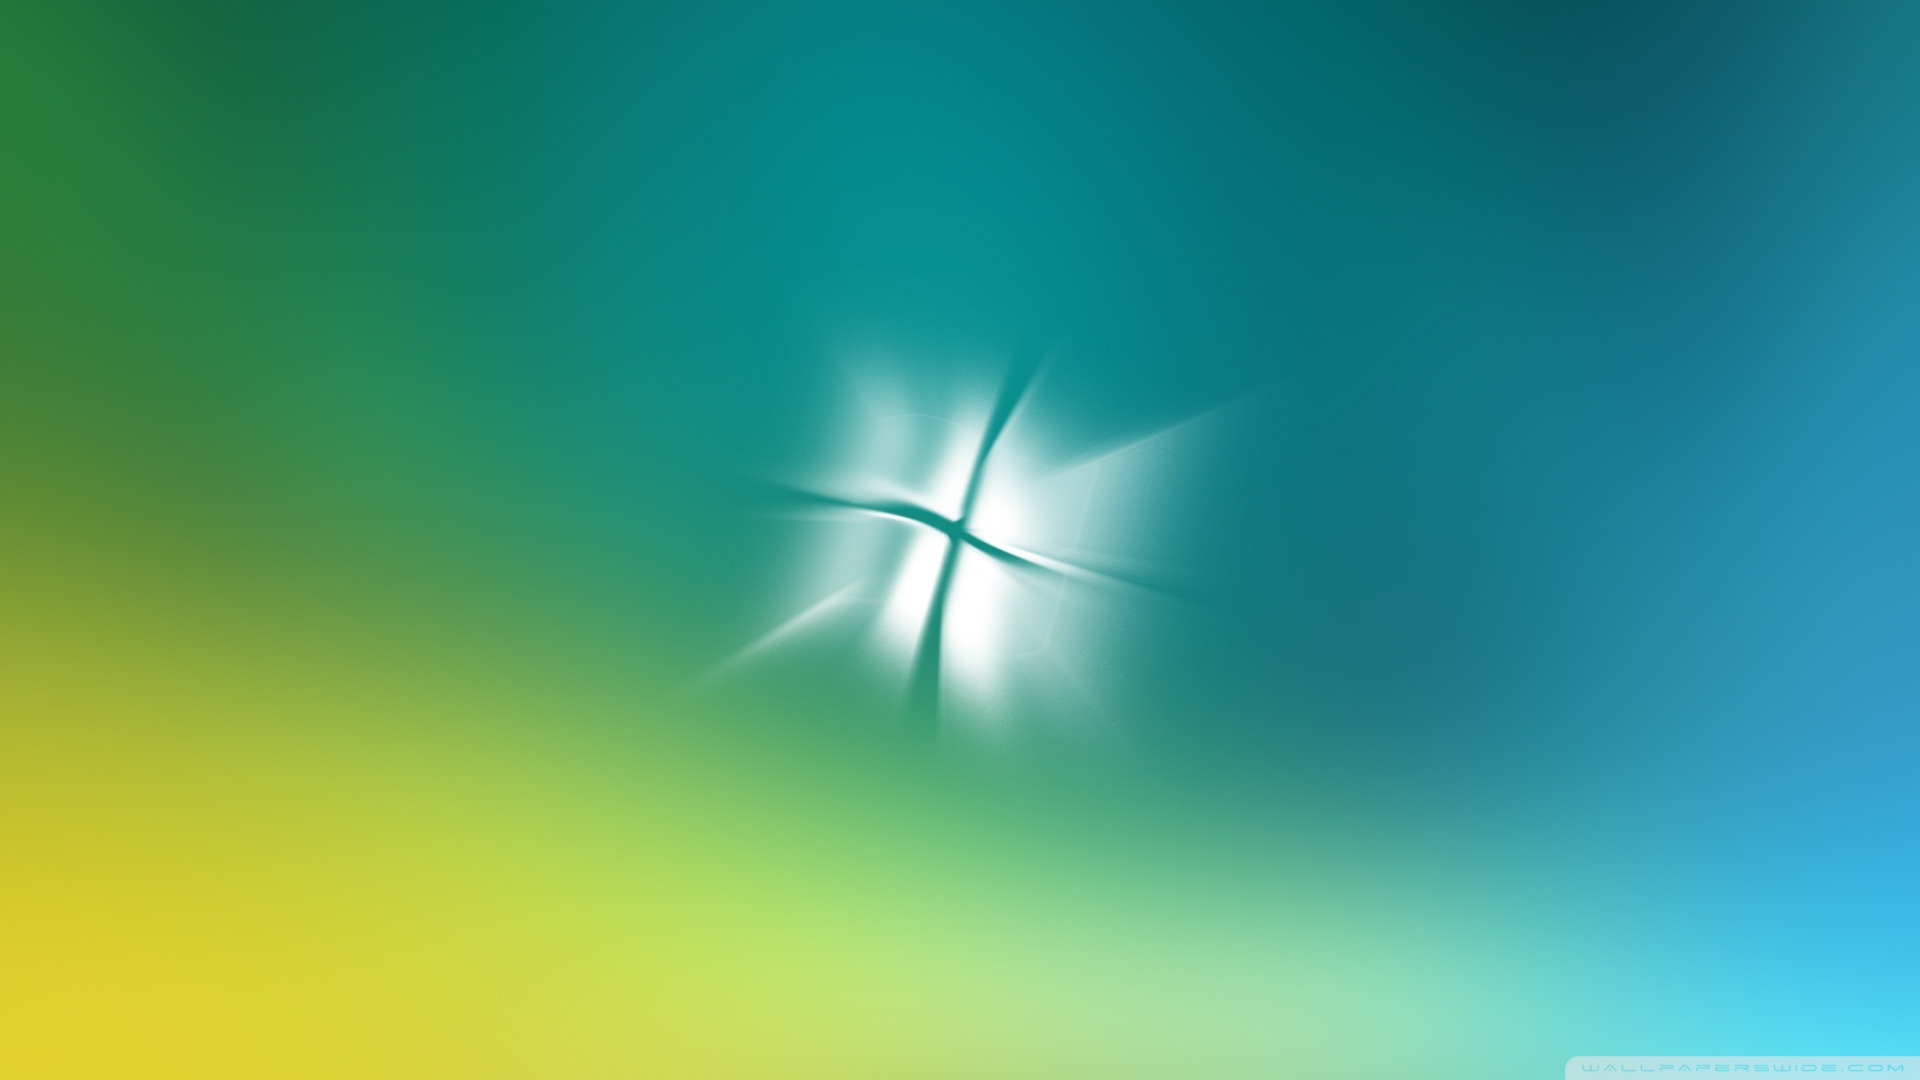 Abstract Windows Vista Wallpaper